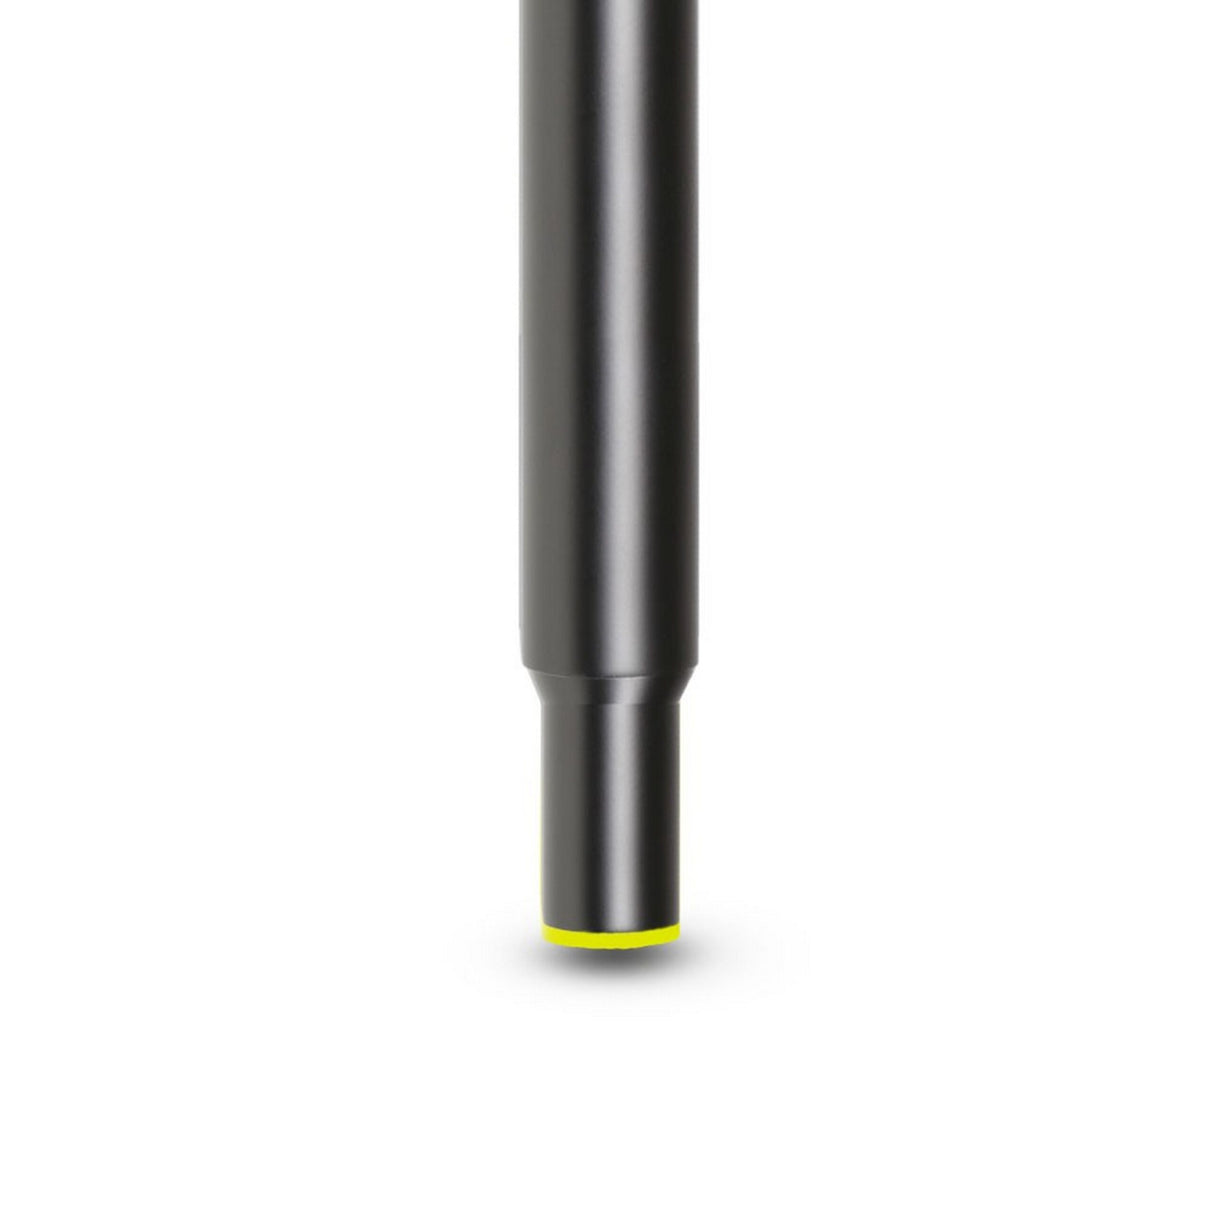 Gravity SP 3332 B Adjustable Speaker Pole 35 mm to 35 mm, 1400 mm